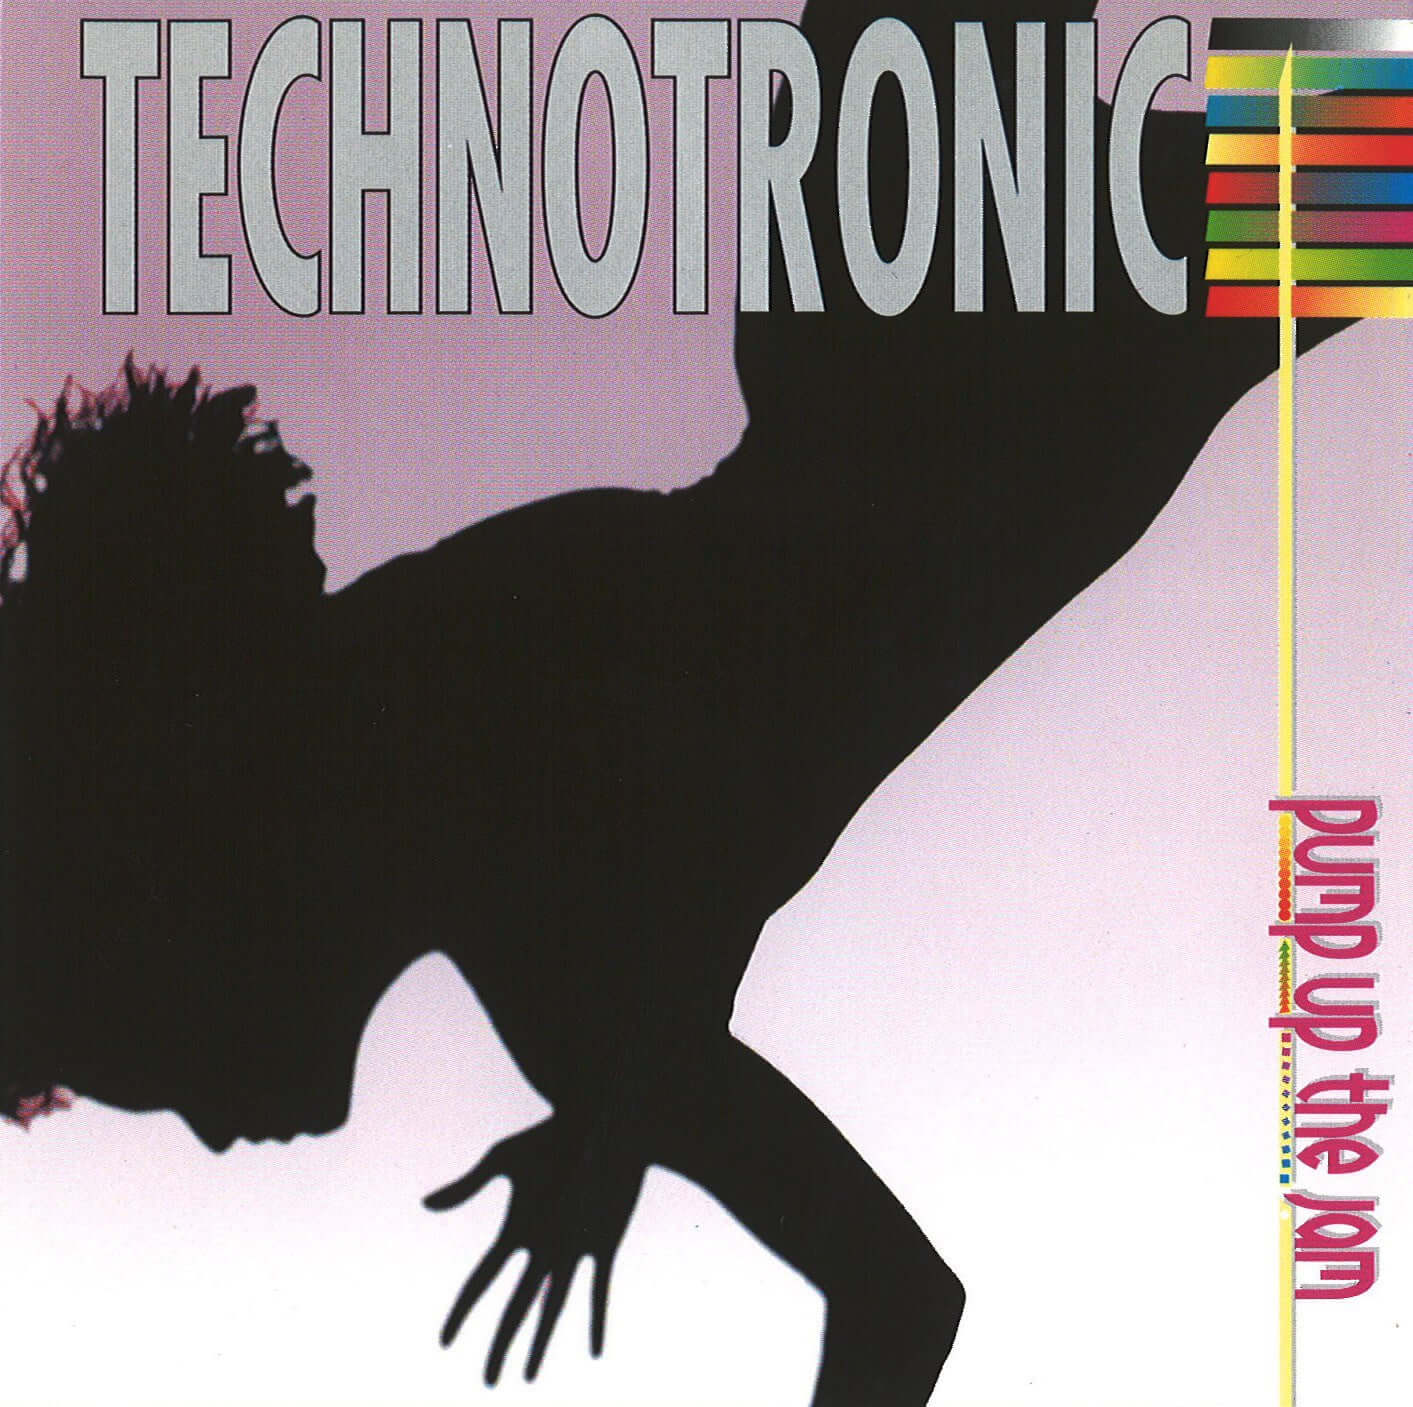 Technotronic - Pump Up The Jam (Studio Acapella)